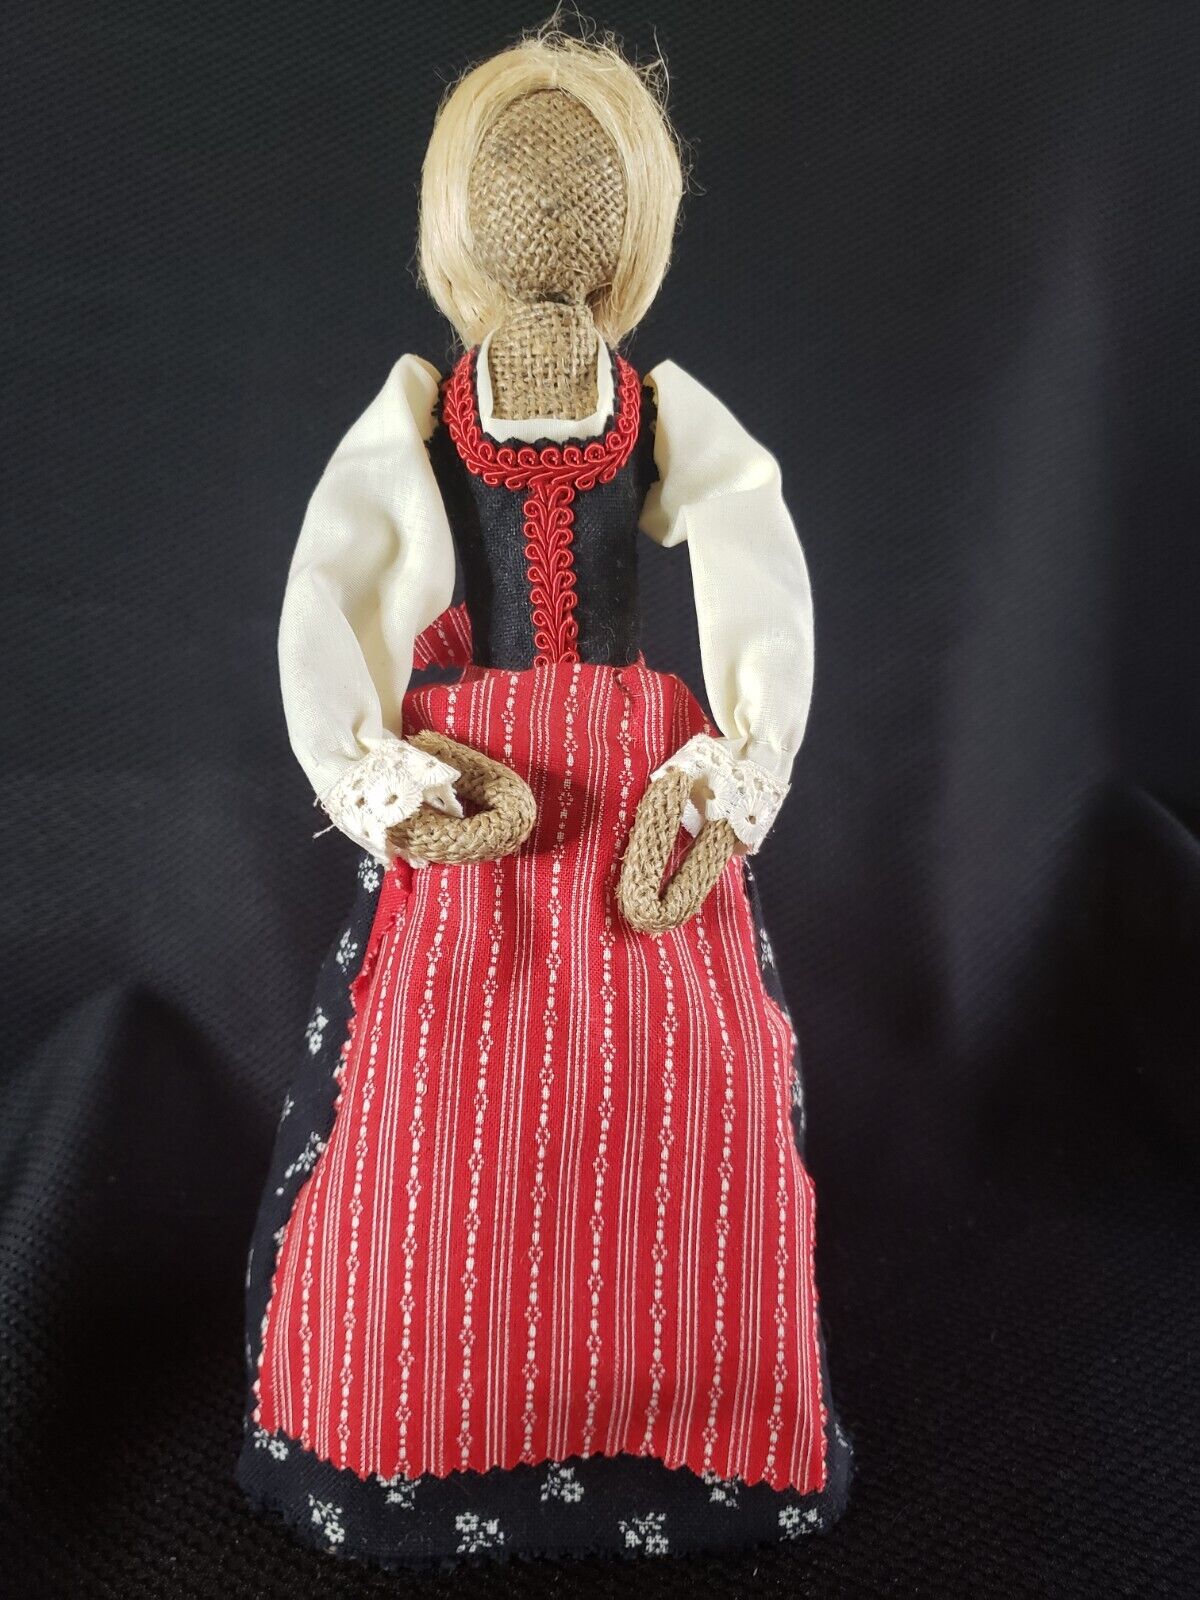 Vintage 19 Handcrafted Burlap Doll Rupfen Puppen German Burlap Doll Folk Costume